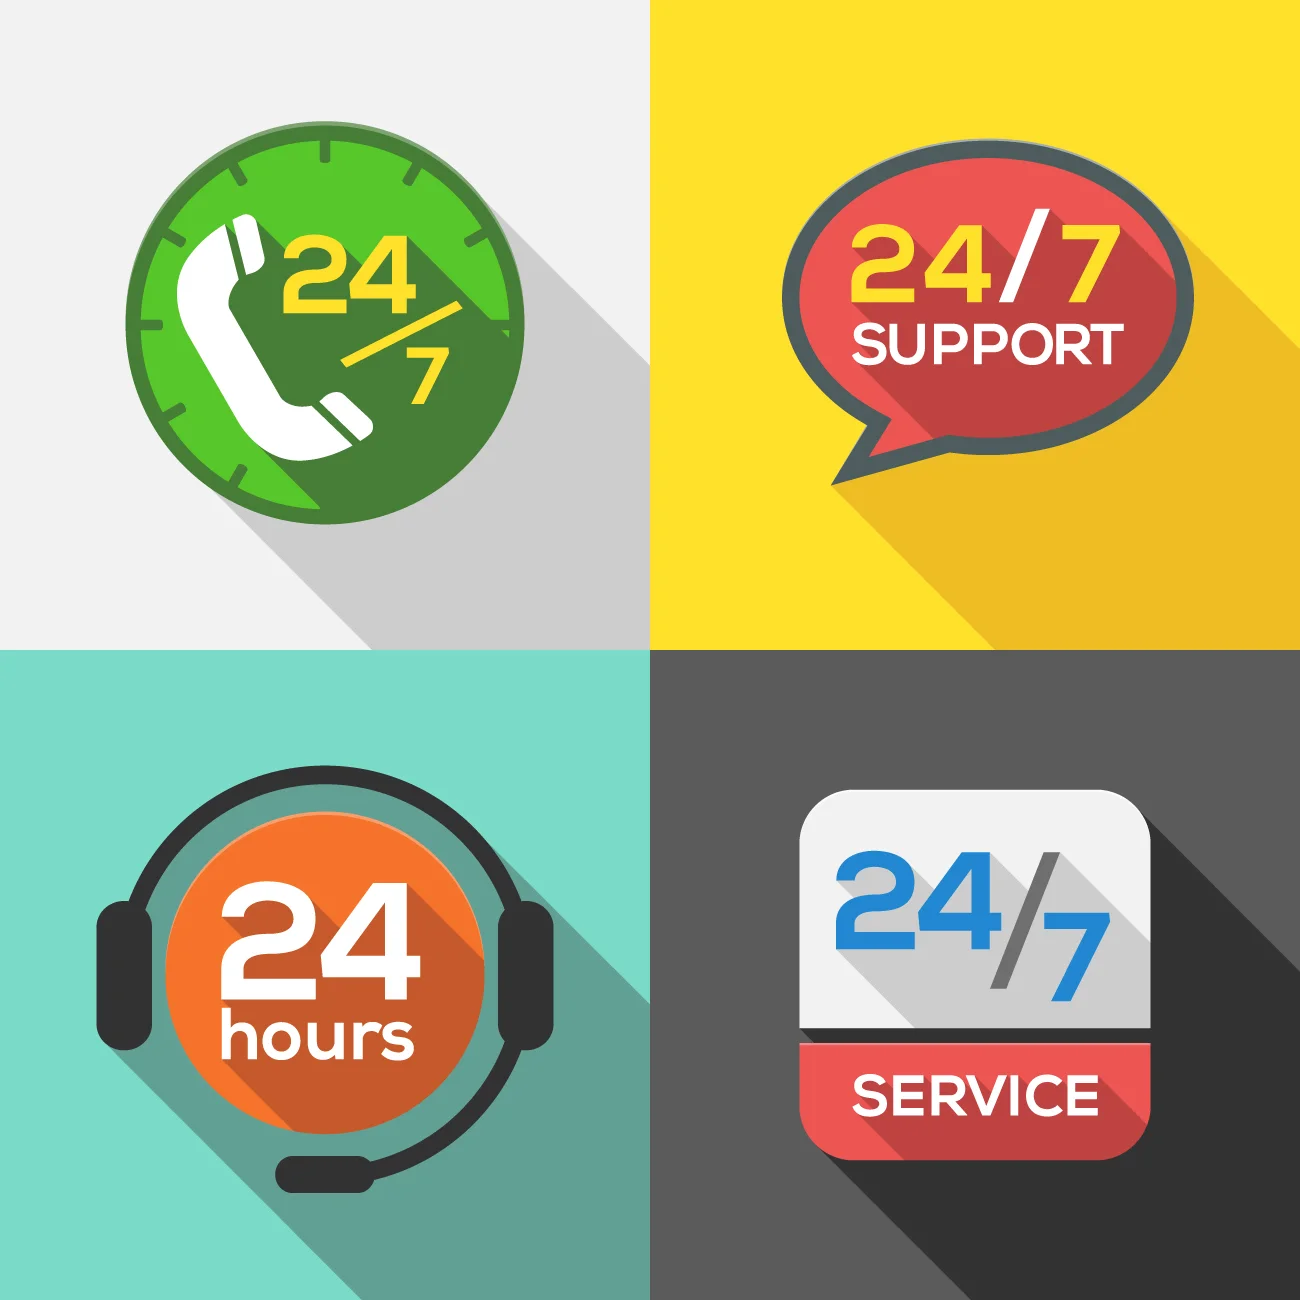 DU Helpline Number 24 Hours